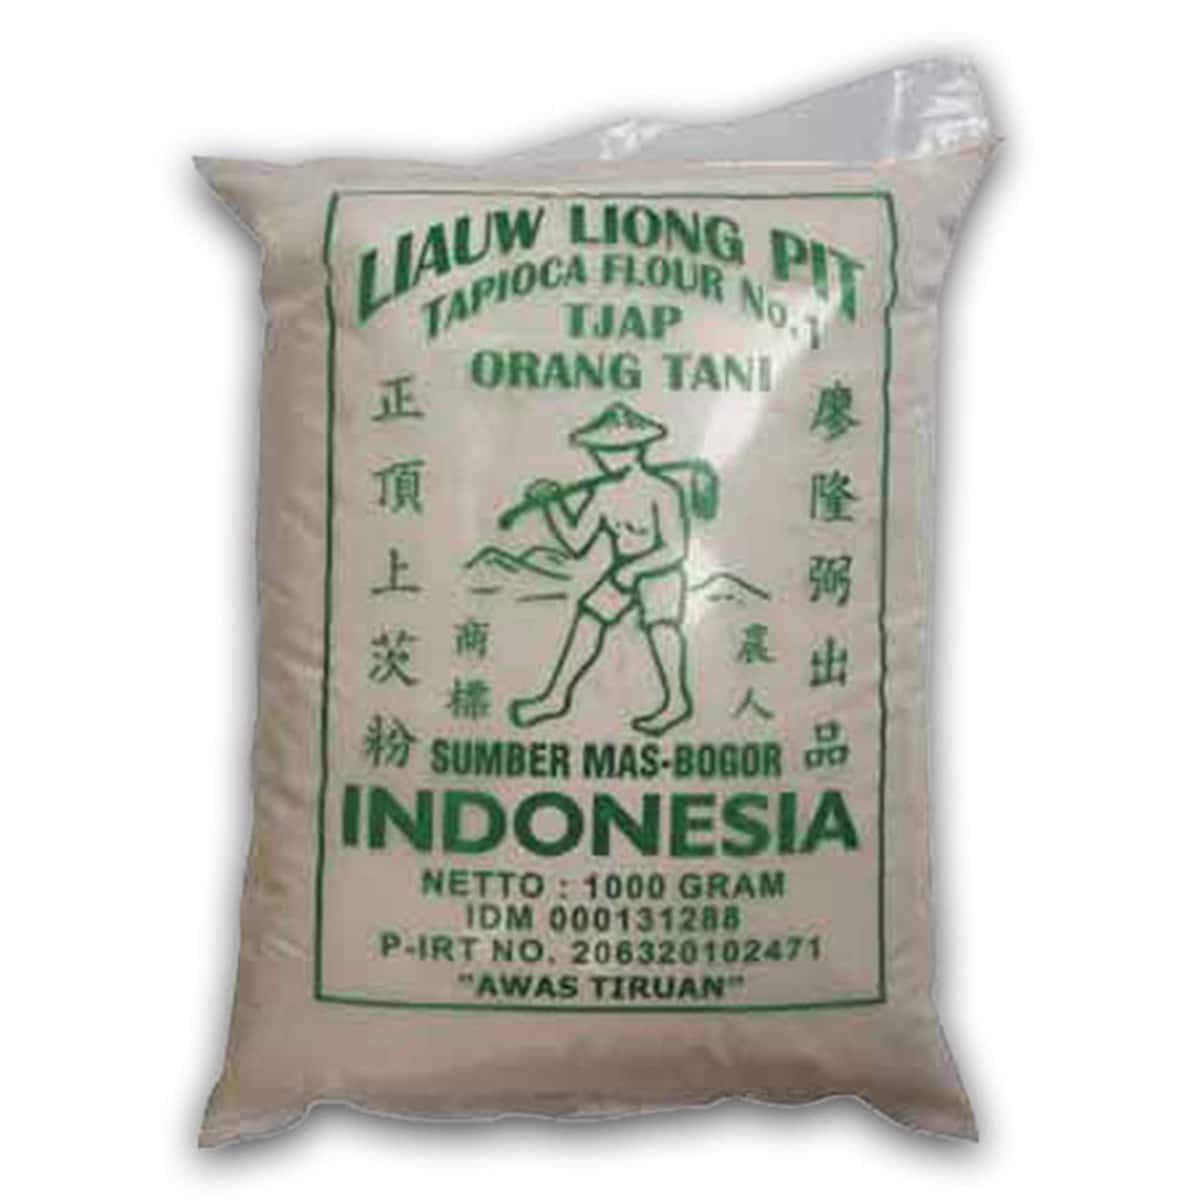 Buy Orang Tani Liauw Liong Pit Tapioca Flour (Gluten Free) - 1 kg